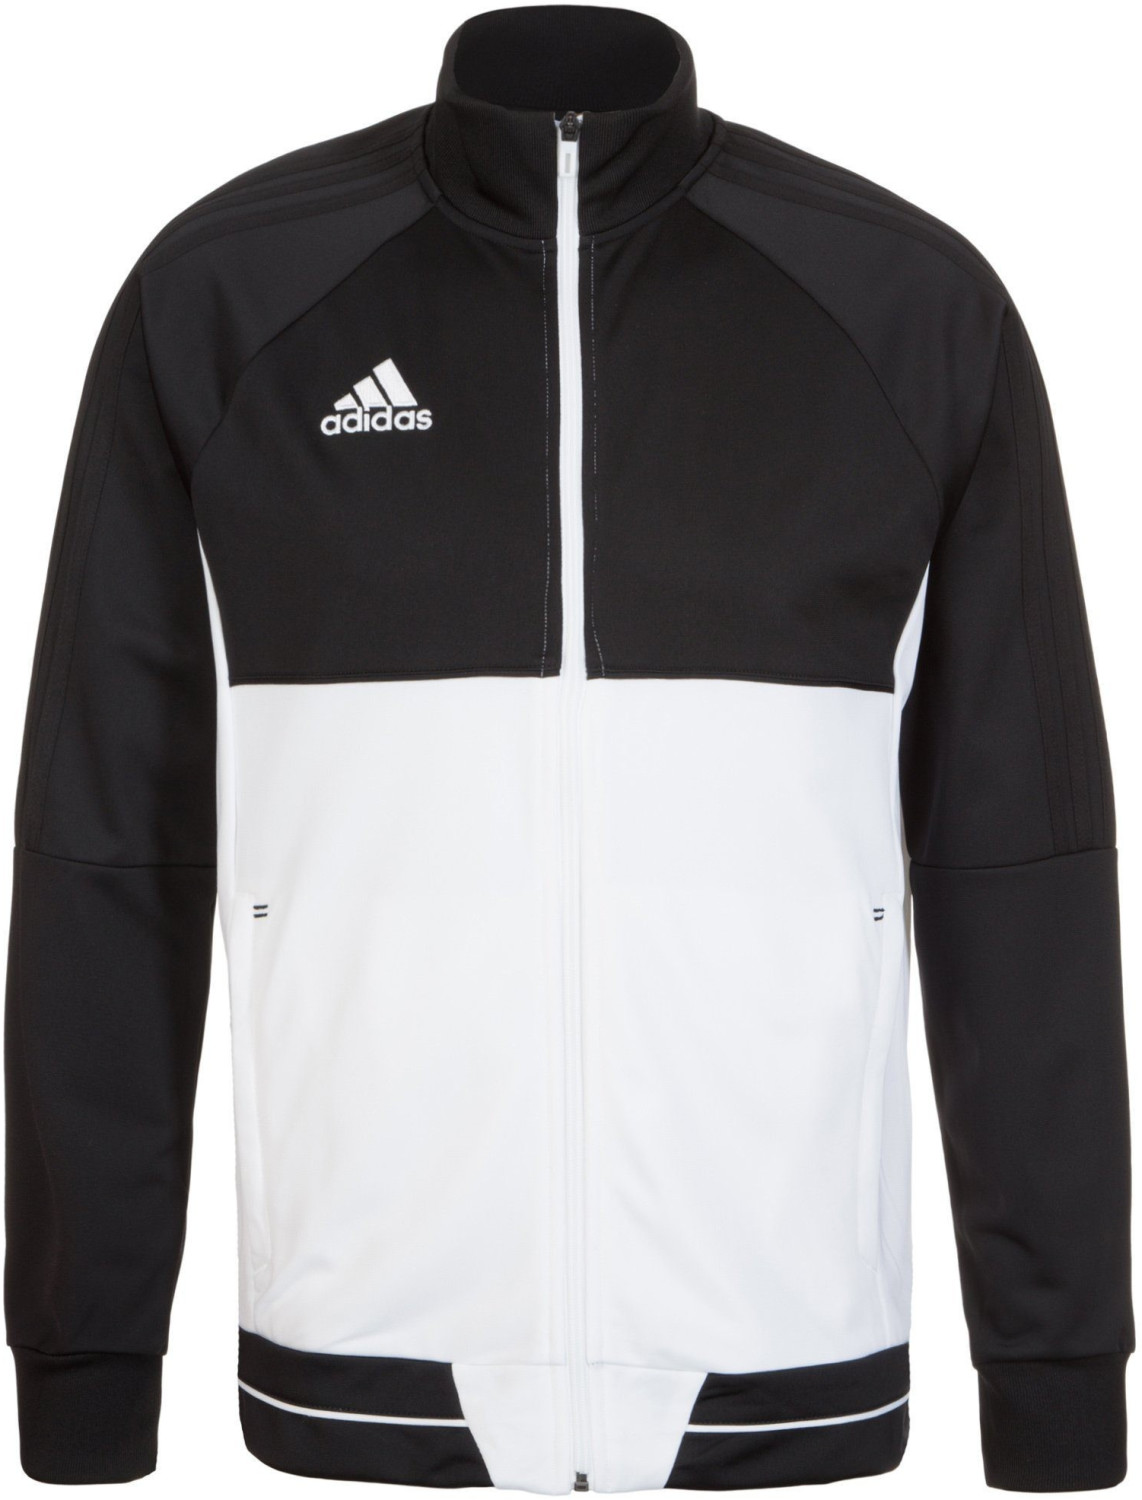 Adidas Tiro 17 Training Jacket Men black/white